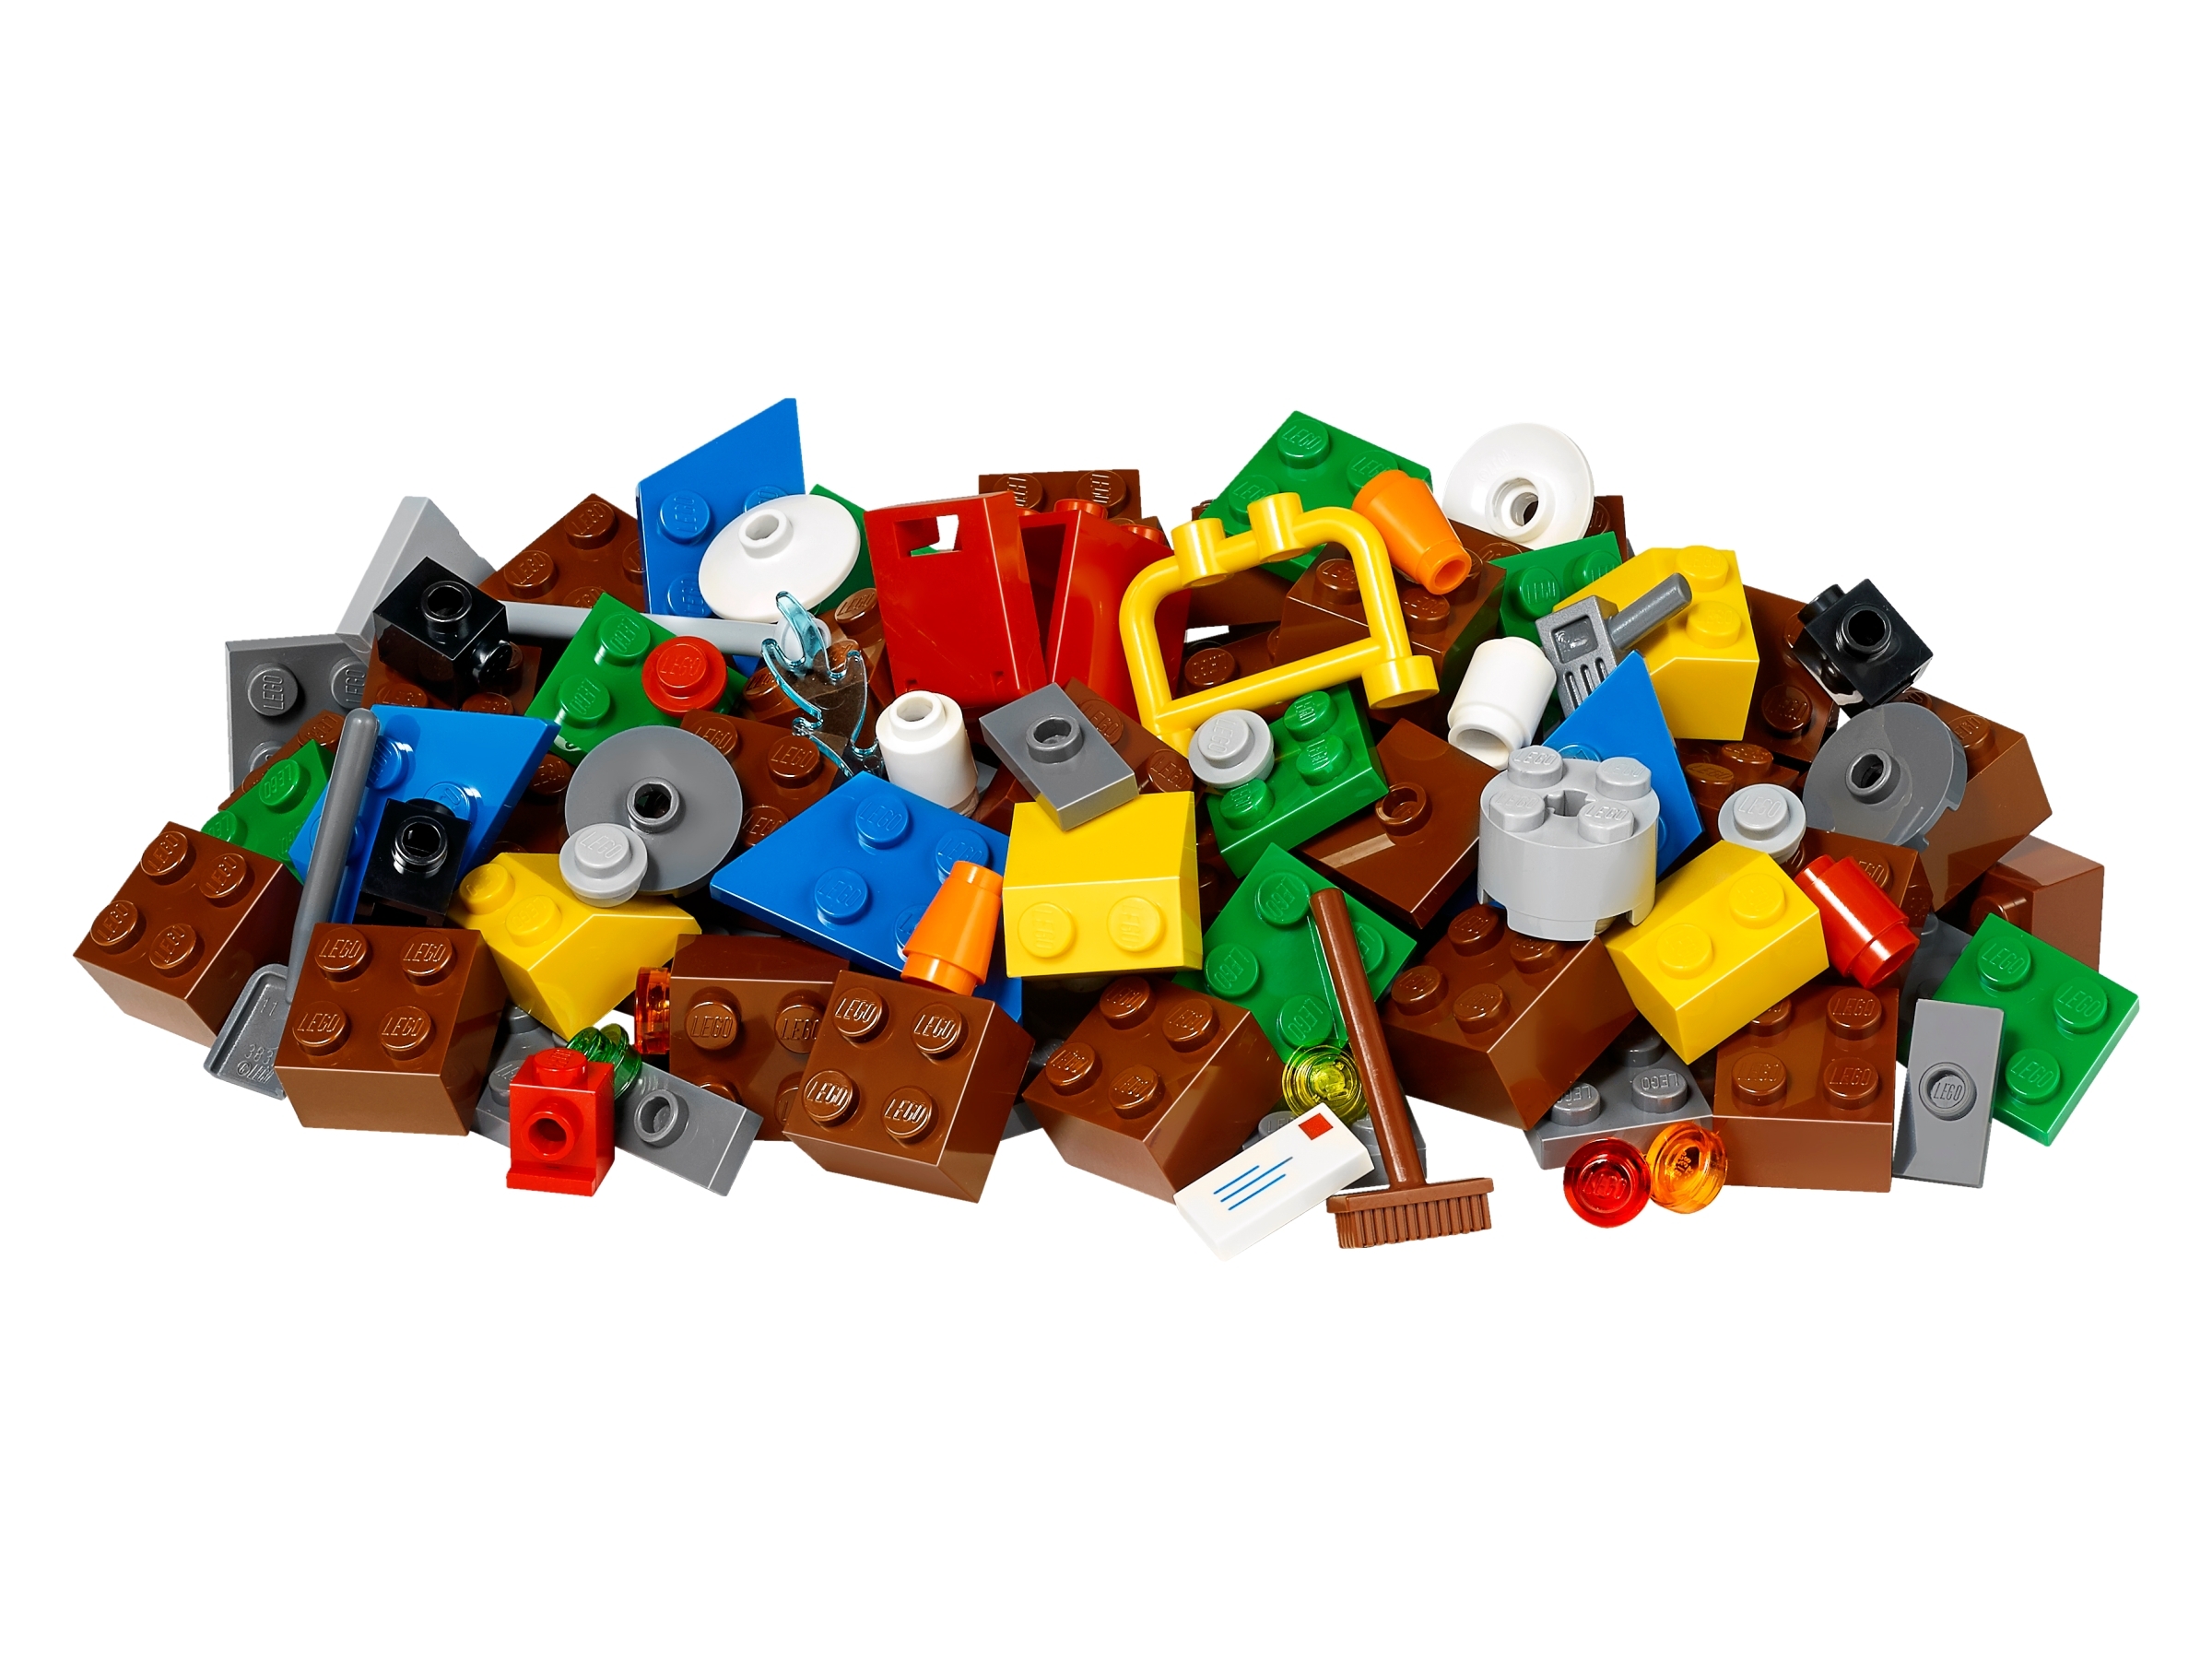 Lego City 853656 Laminated playmat Brand new & sealed in box.105pcs 